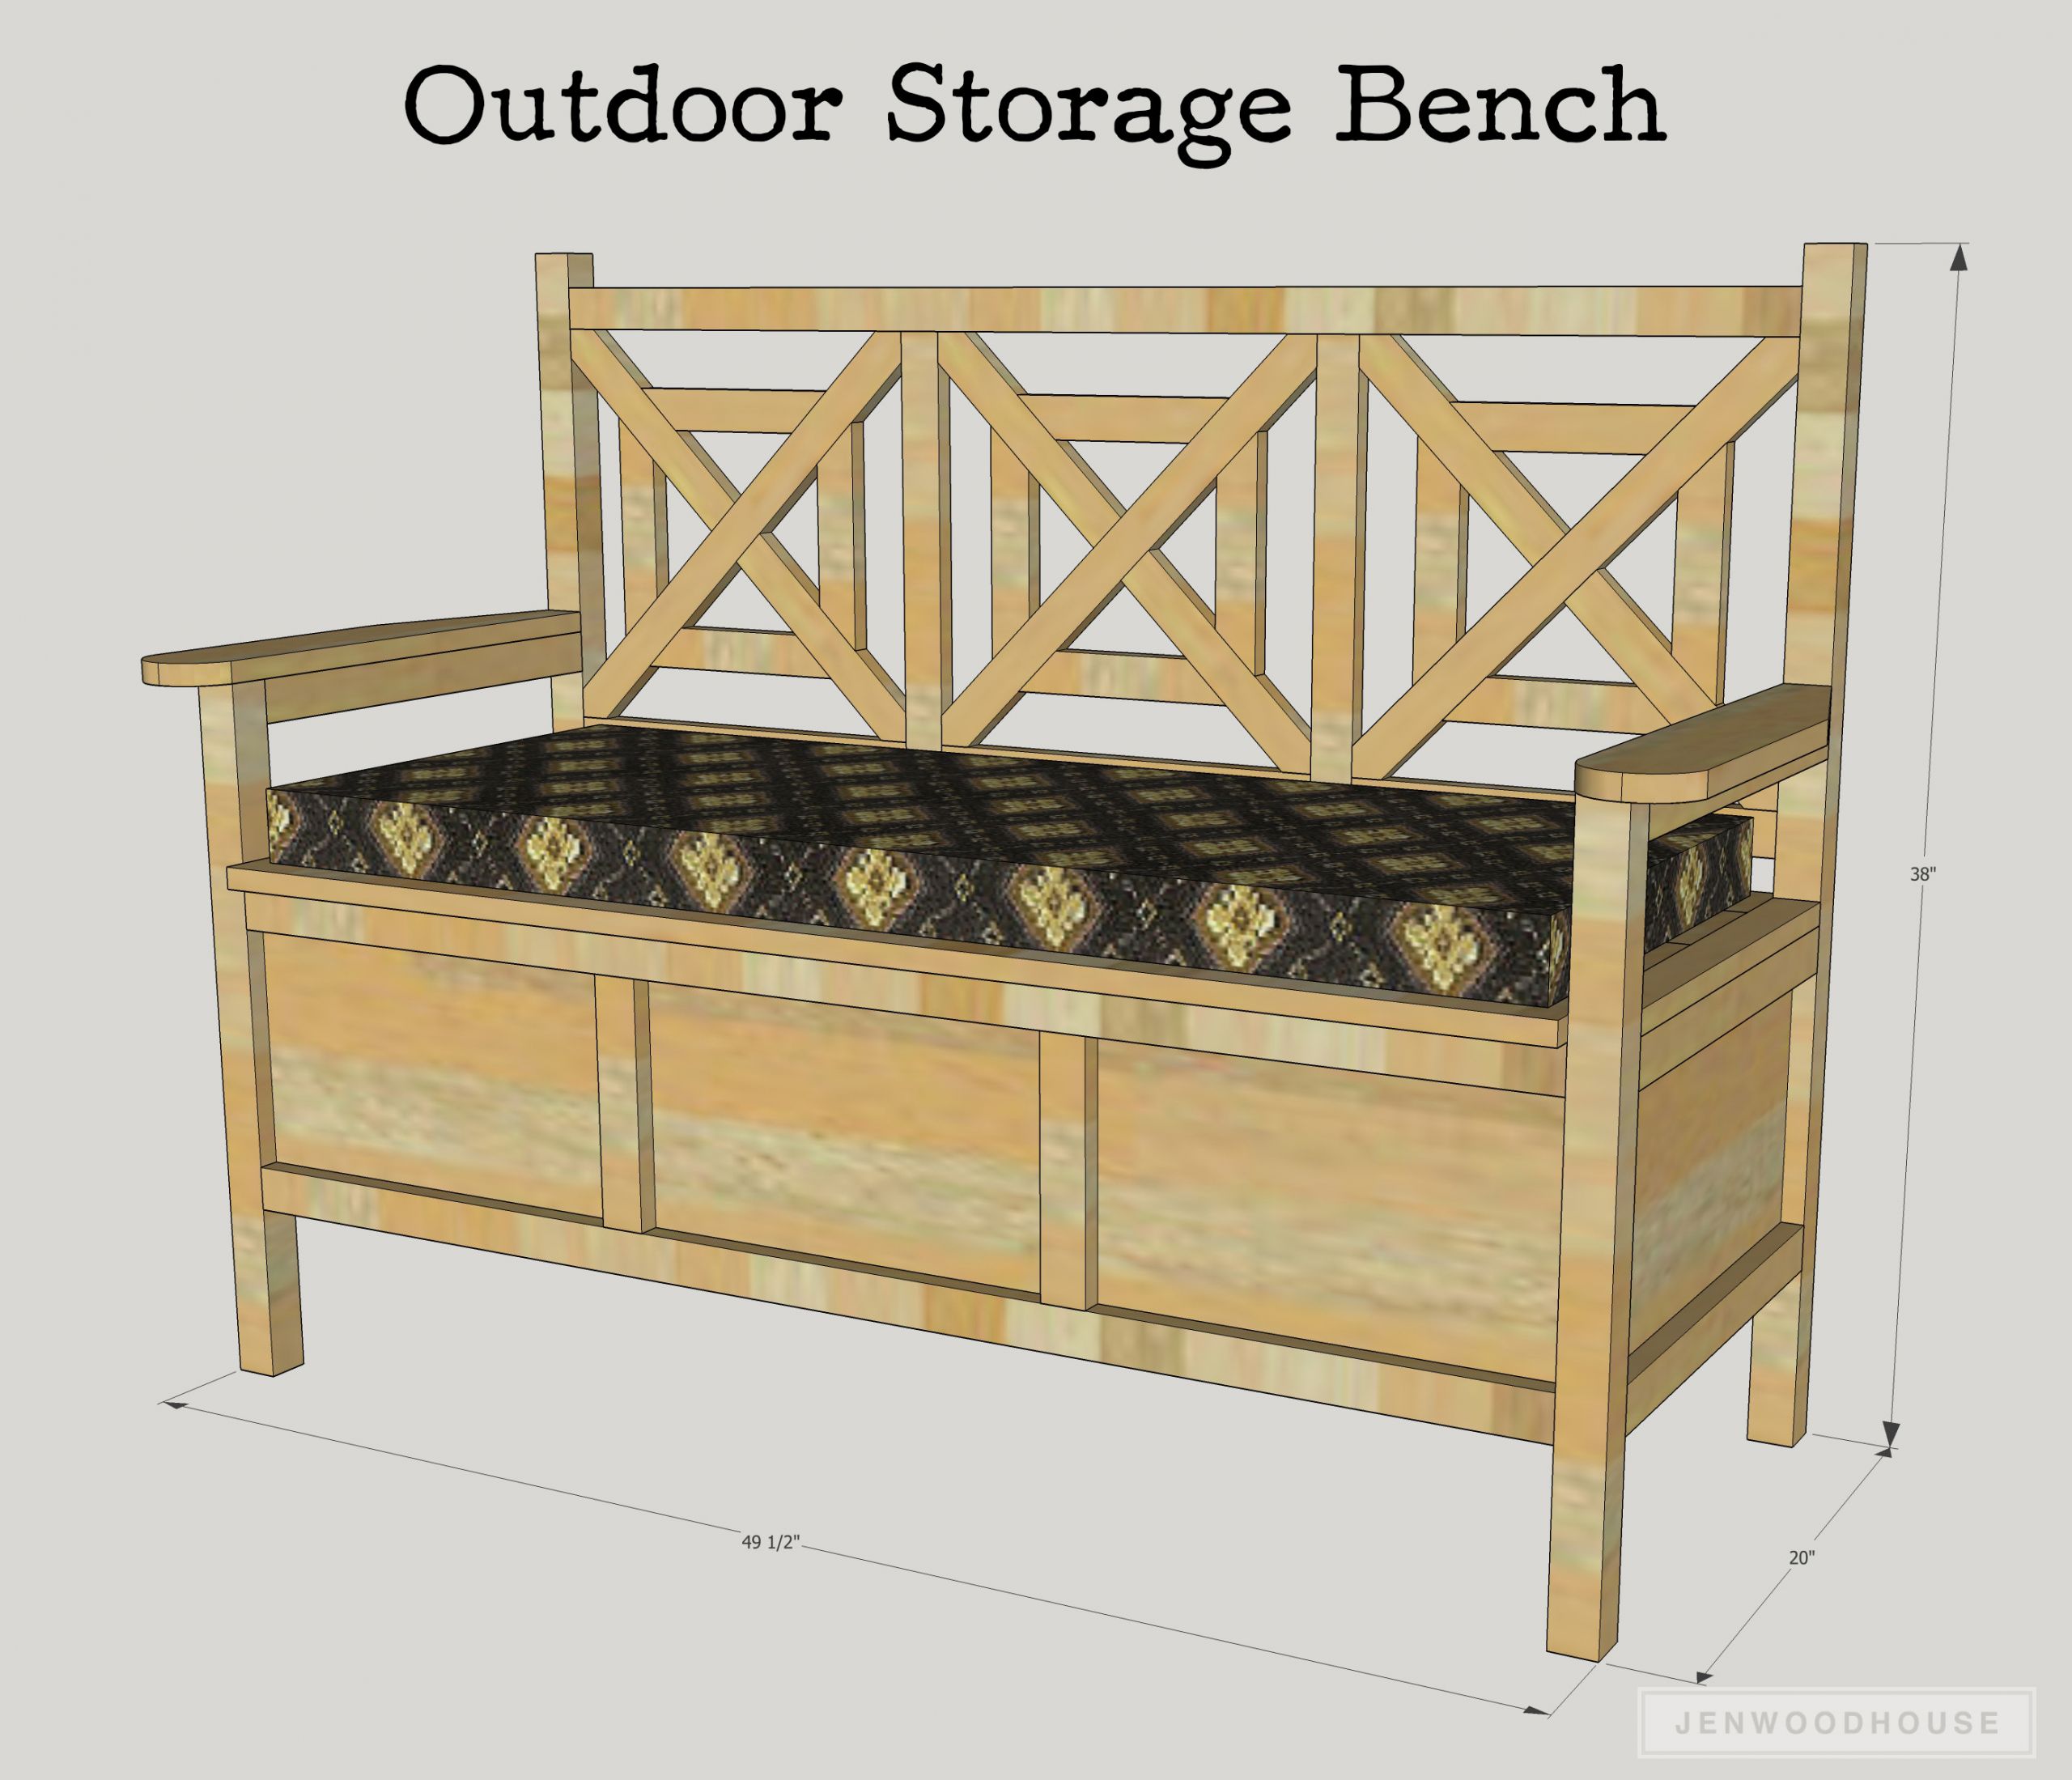 Outdoor Storage Bench DIY
 How To Build A DIY Outdoor Storage Bench